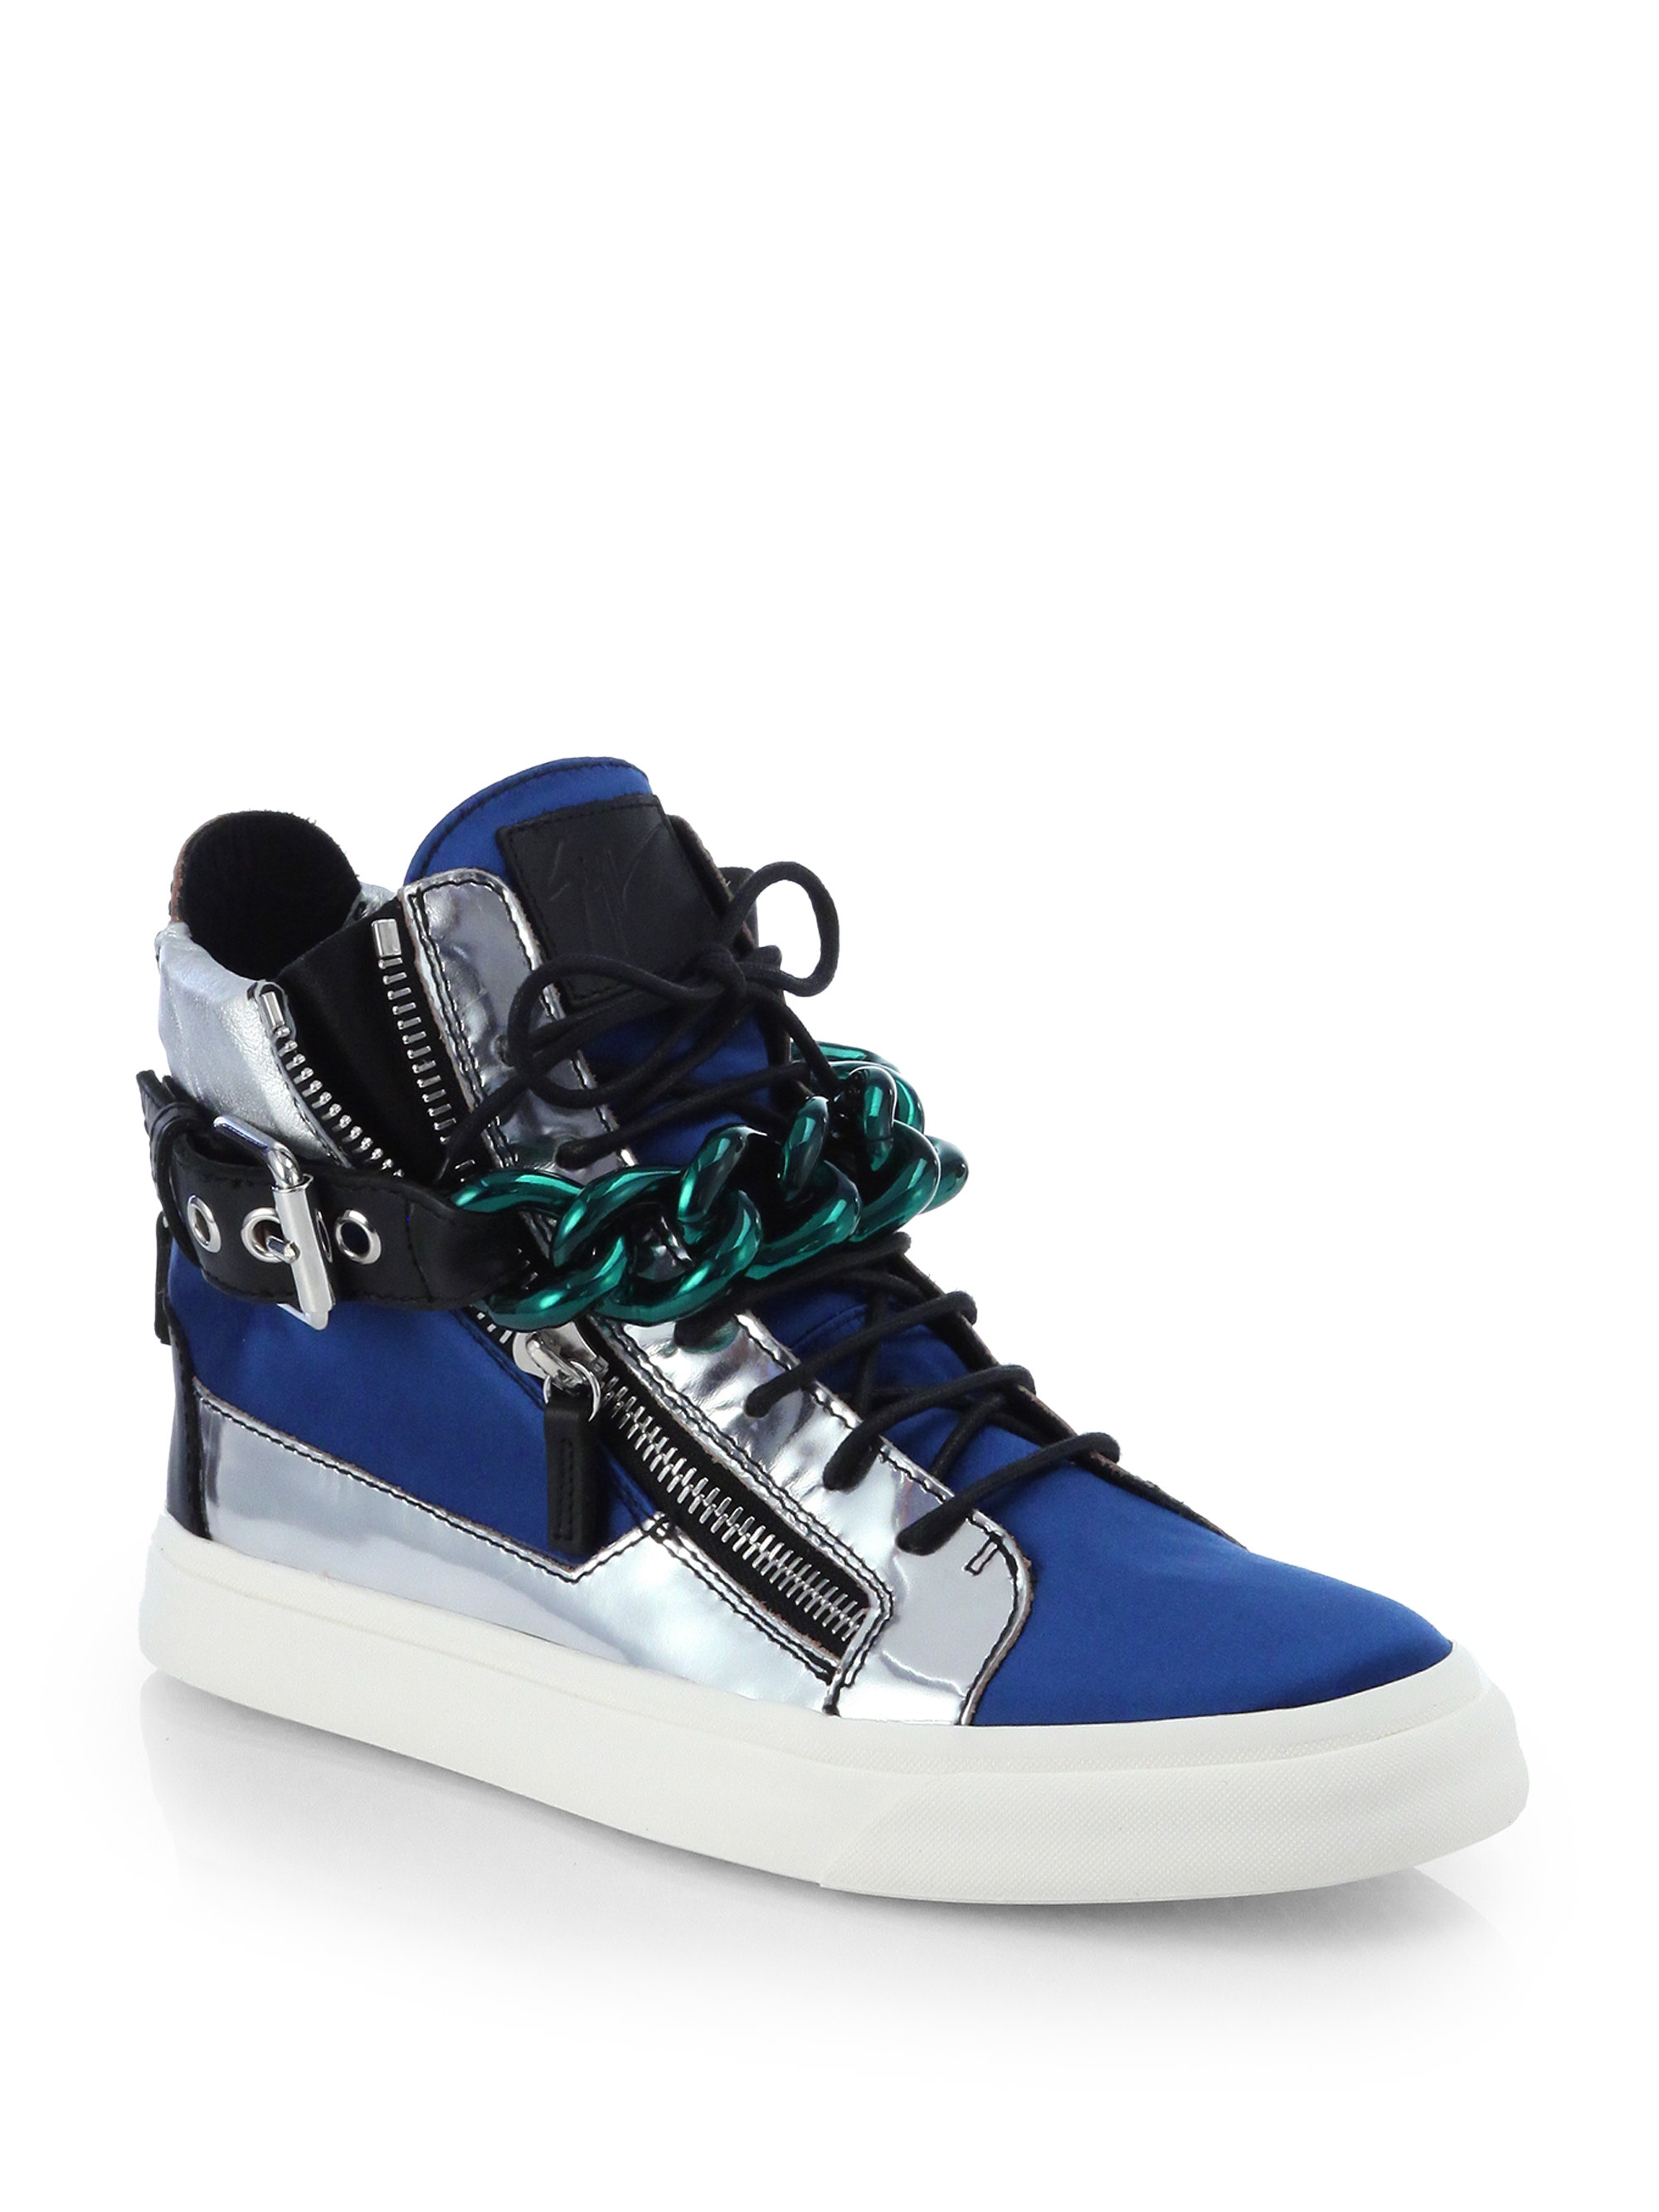 Giuseppe zanotti Metallic Leather Satin Chain Hightop Sneakers in Blue ...